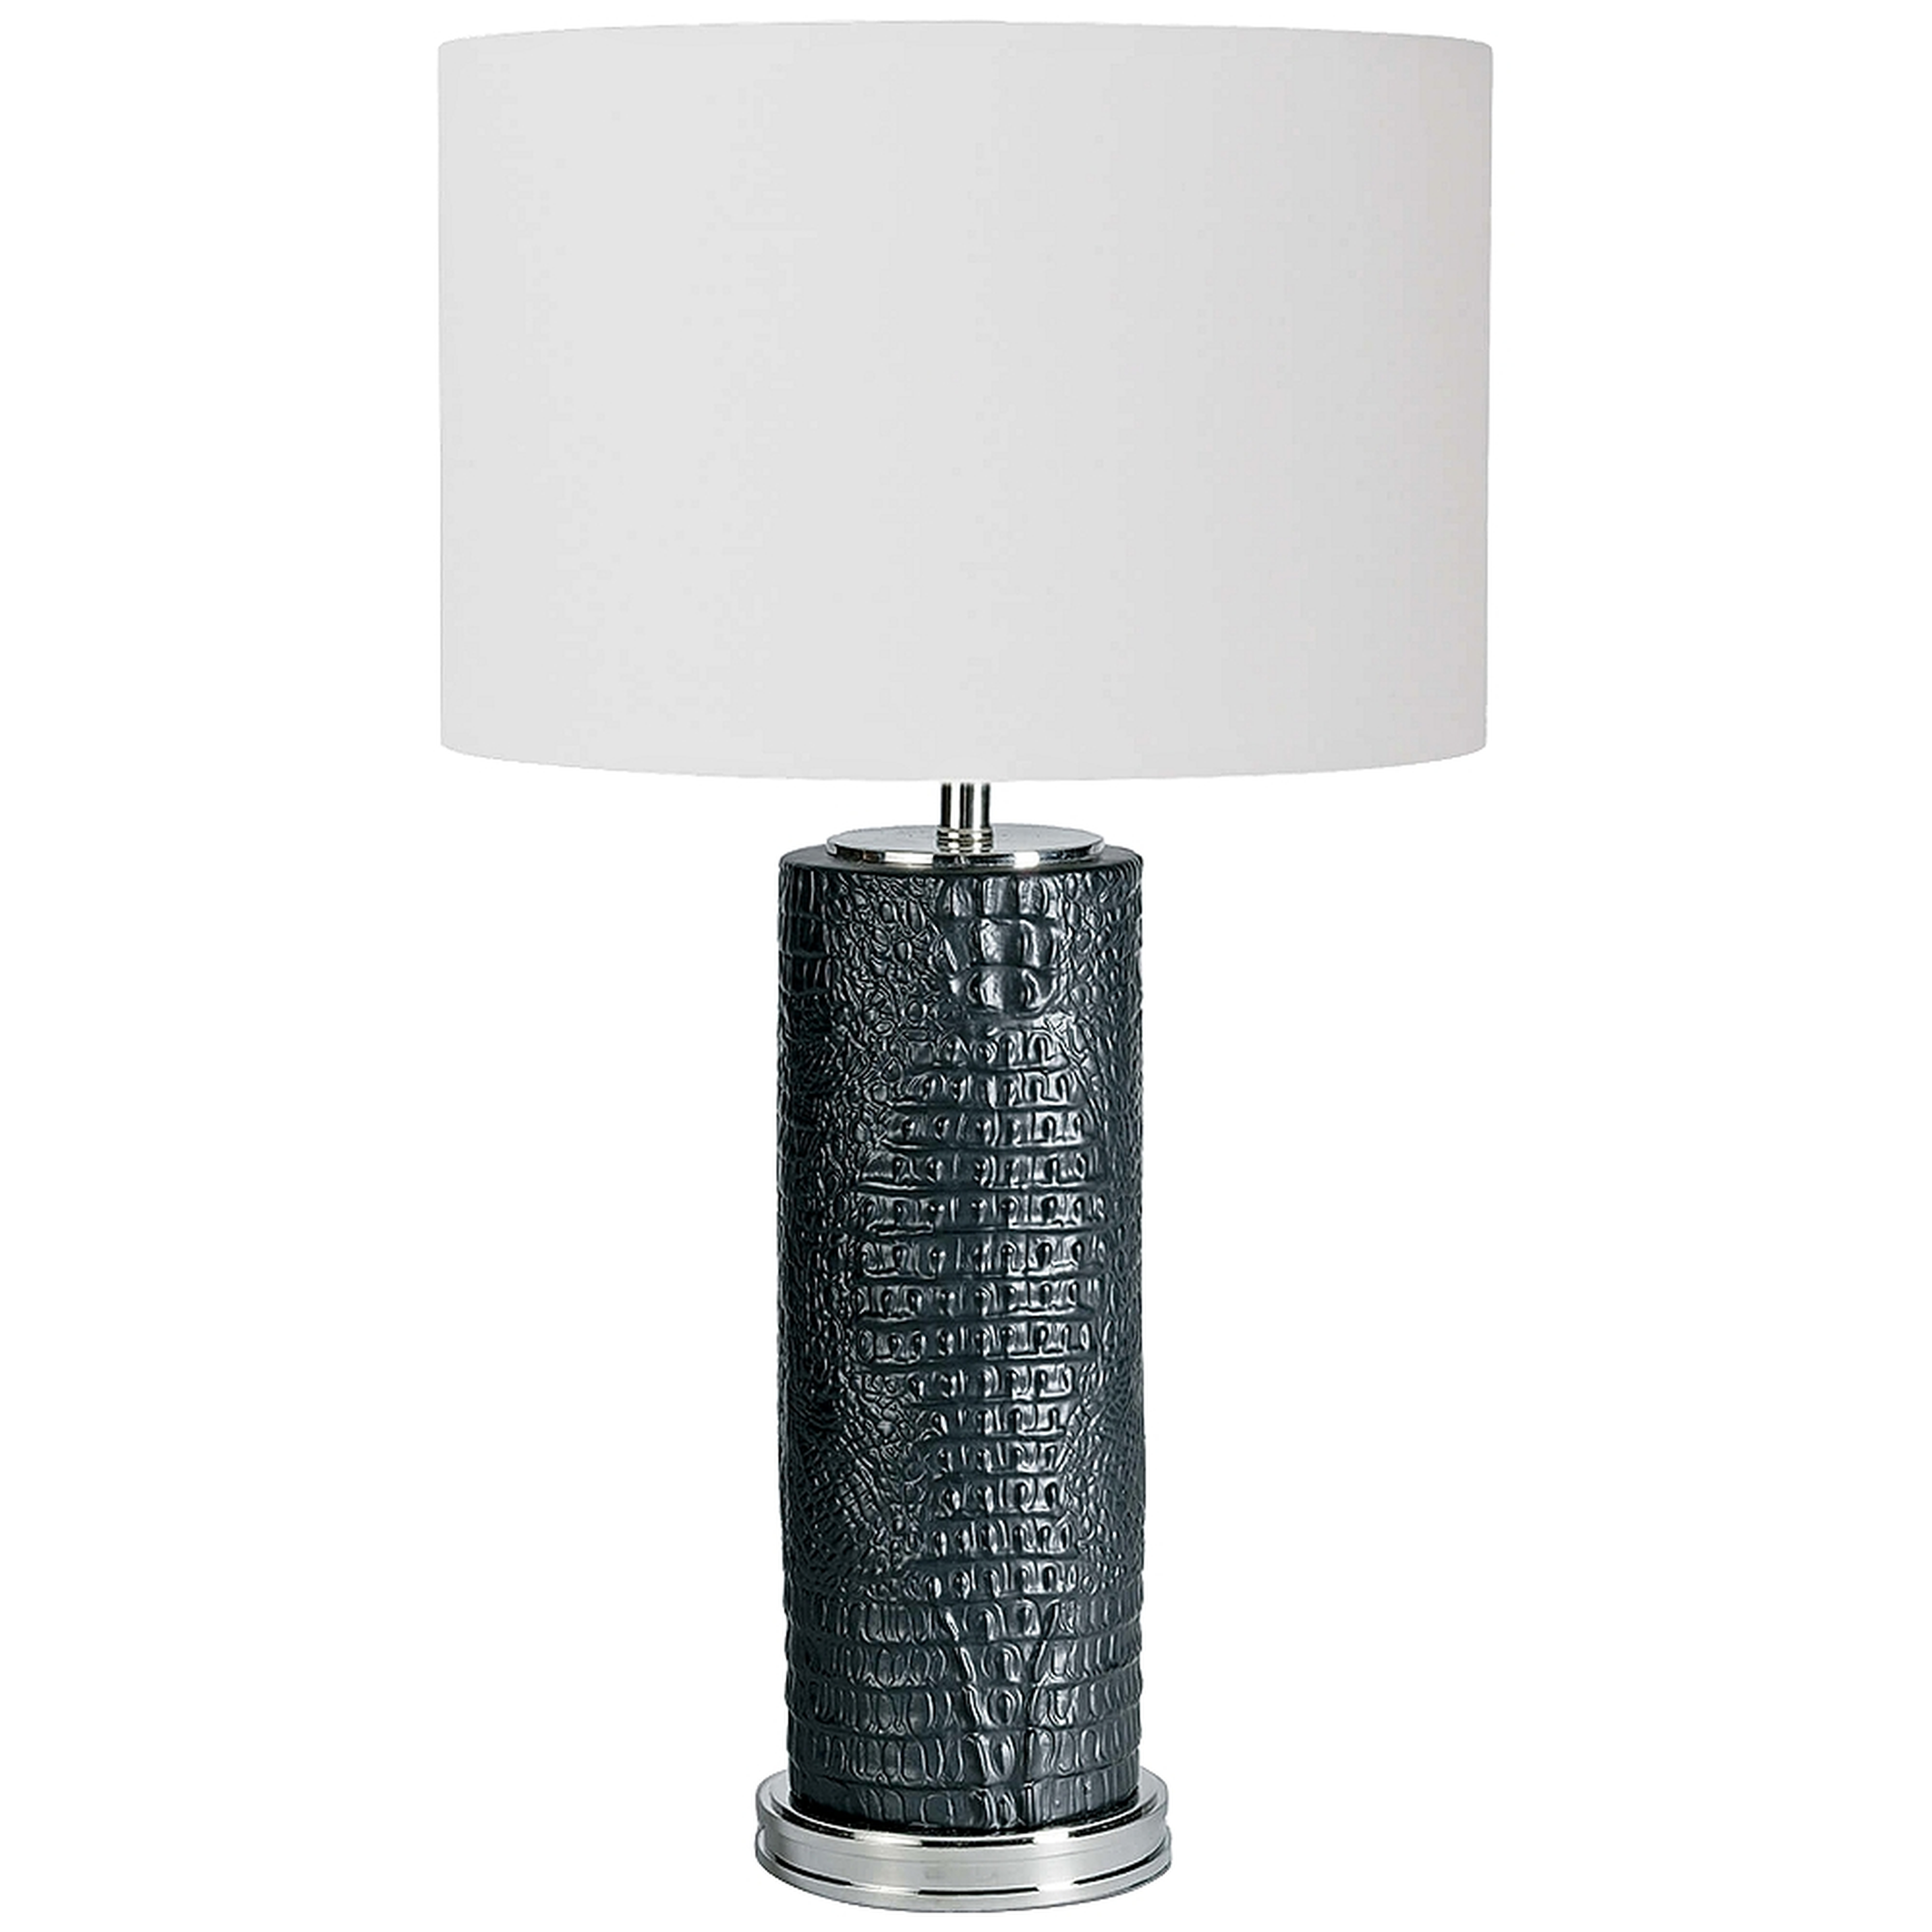 Regina Andrew Design Blake Black Table Lamp - Style # 40A85 - Lamps Plus